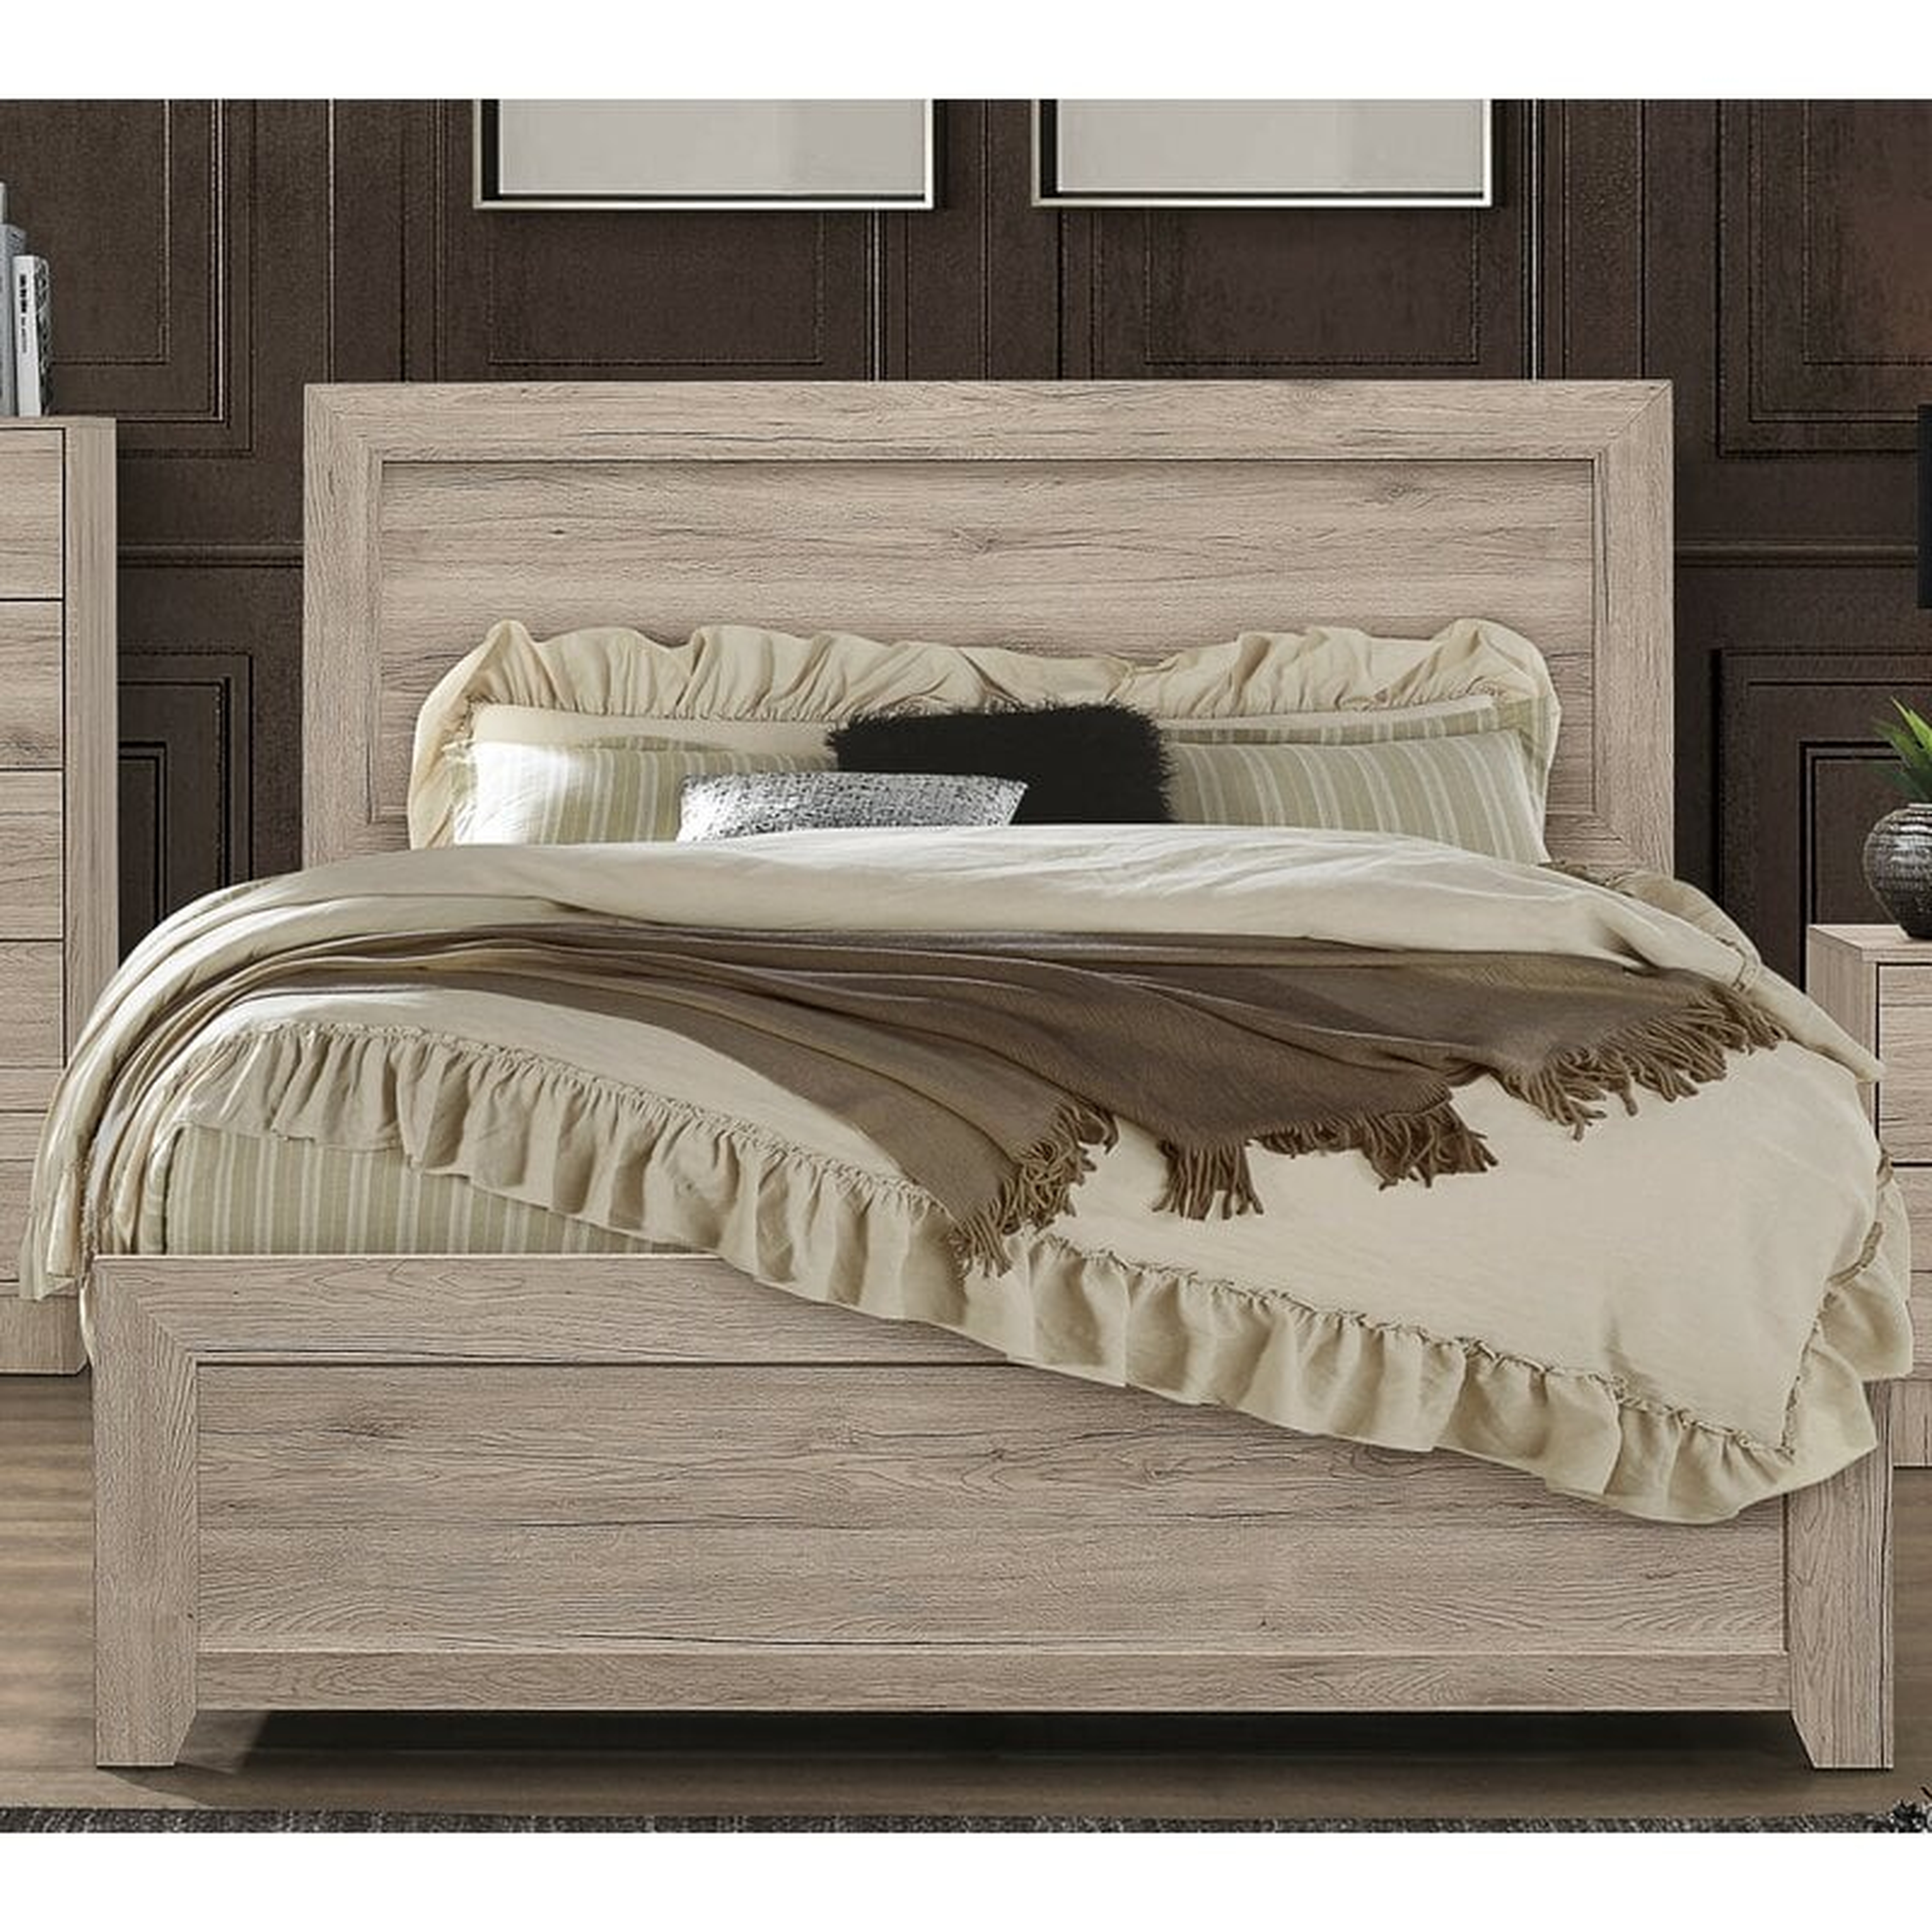 Hillsg Standard Bed, Queen - Wayfair